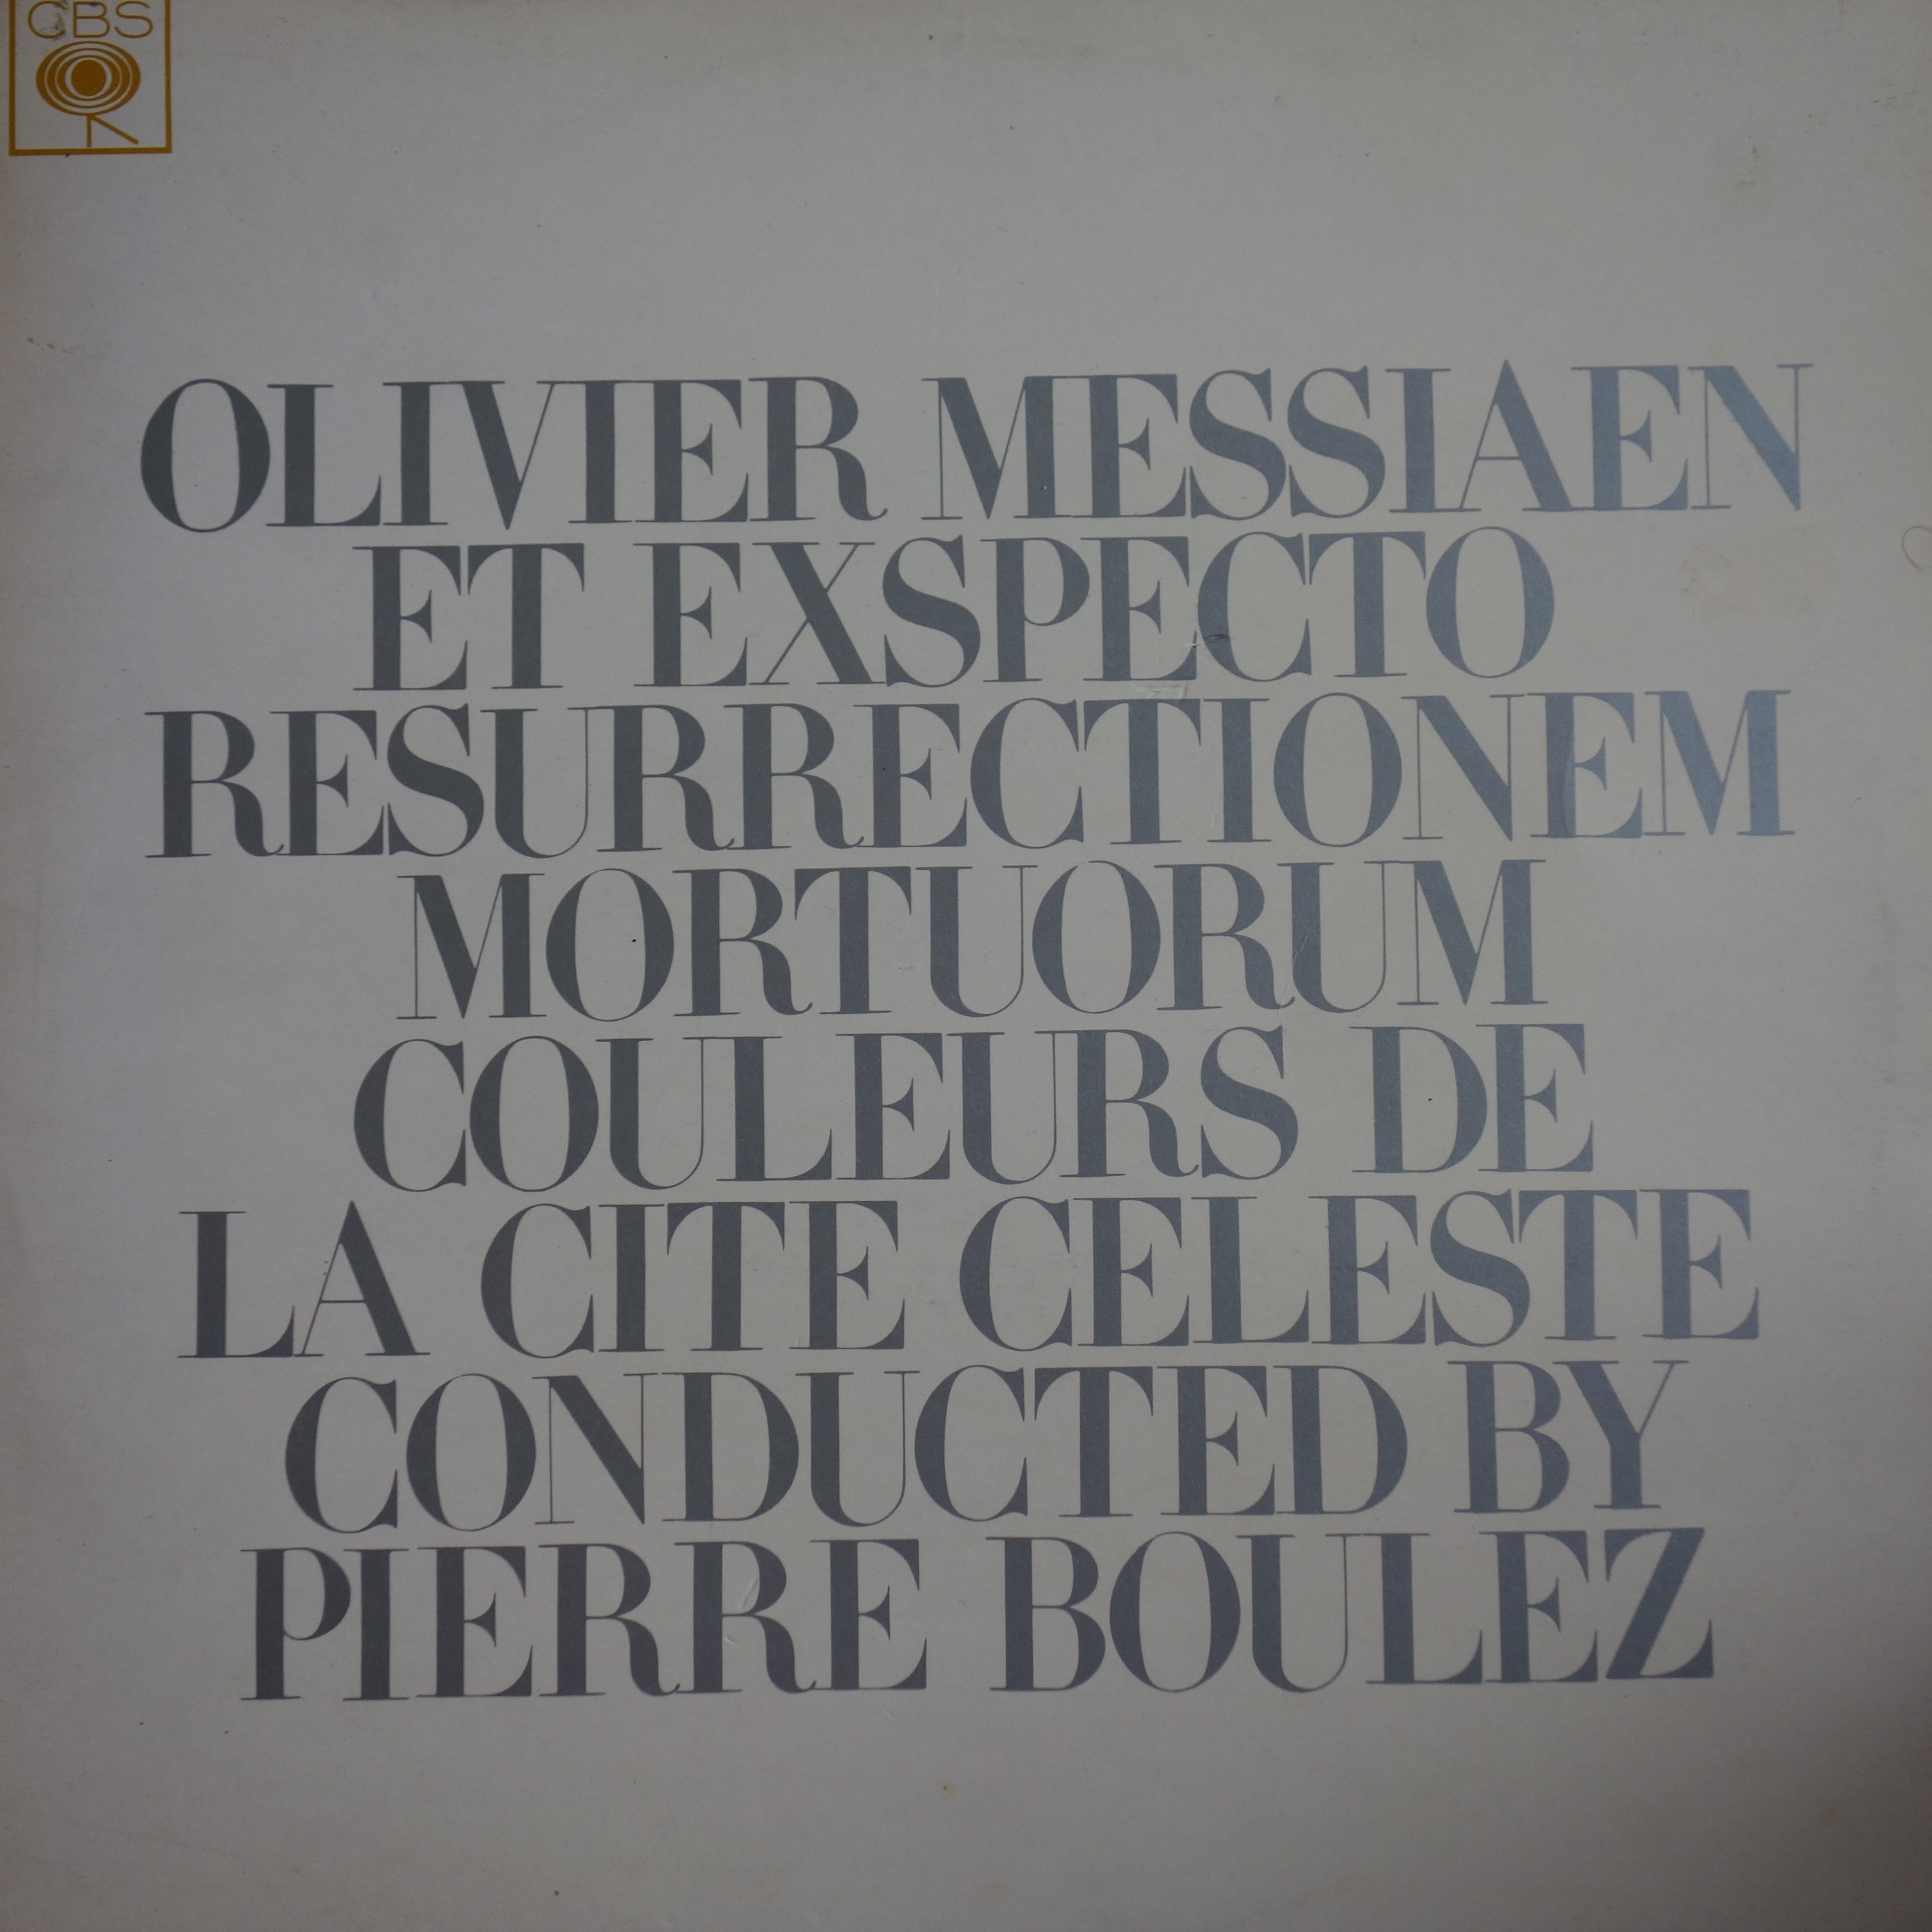 CBS 72471 Messiaen ET Exspecto Resurrectionem / Lorid / Boulez / Percussion de Strasbourg